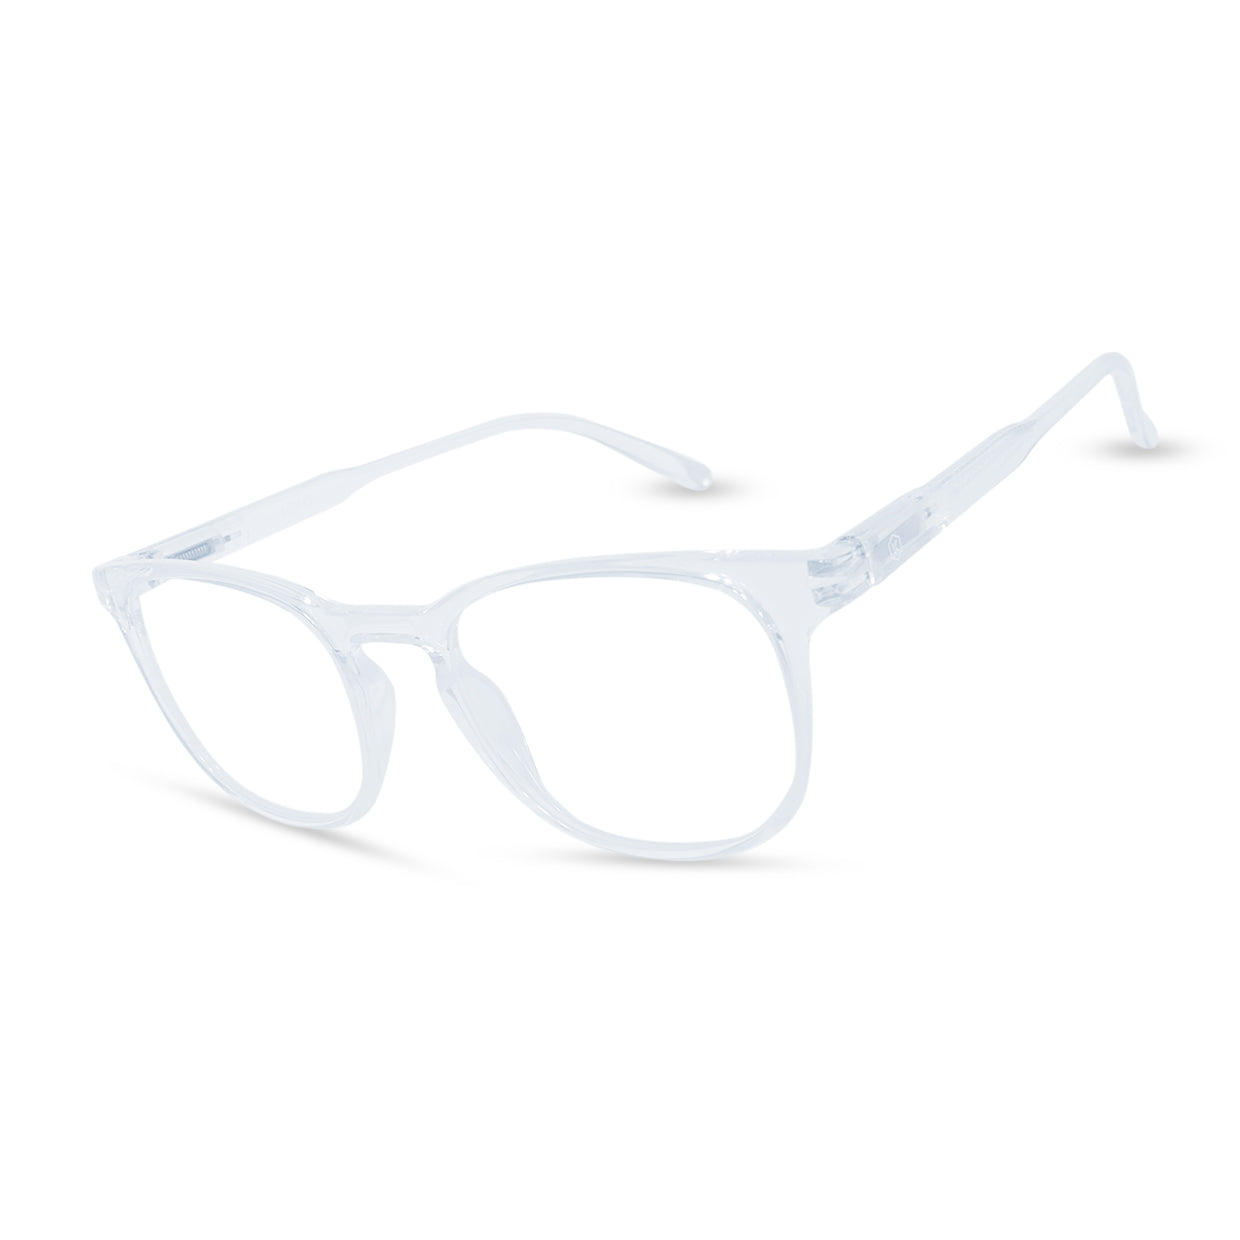 Fashionable Glasses in Transparent / Blue Light